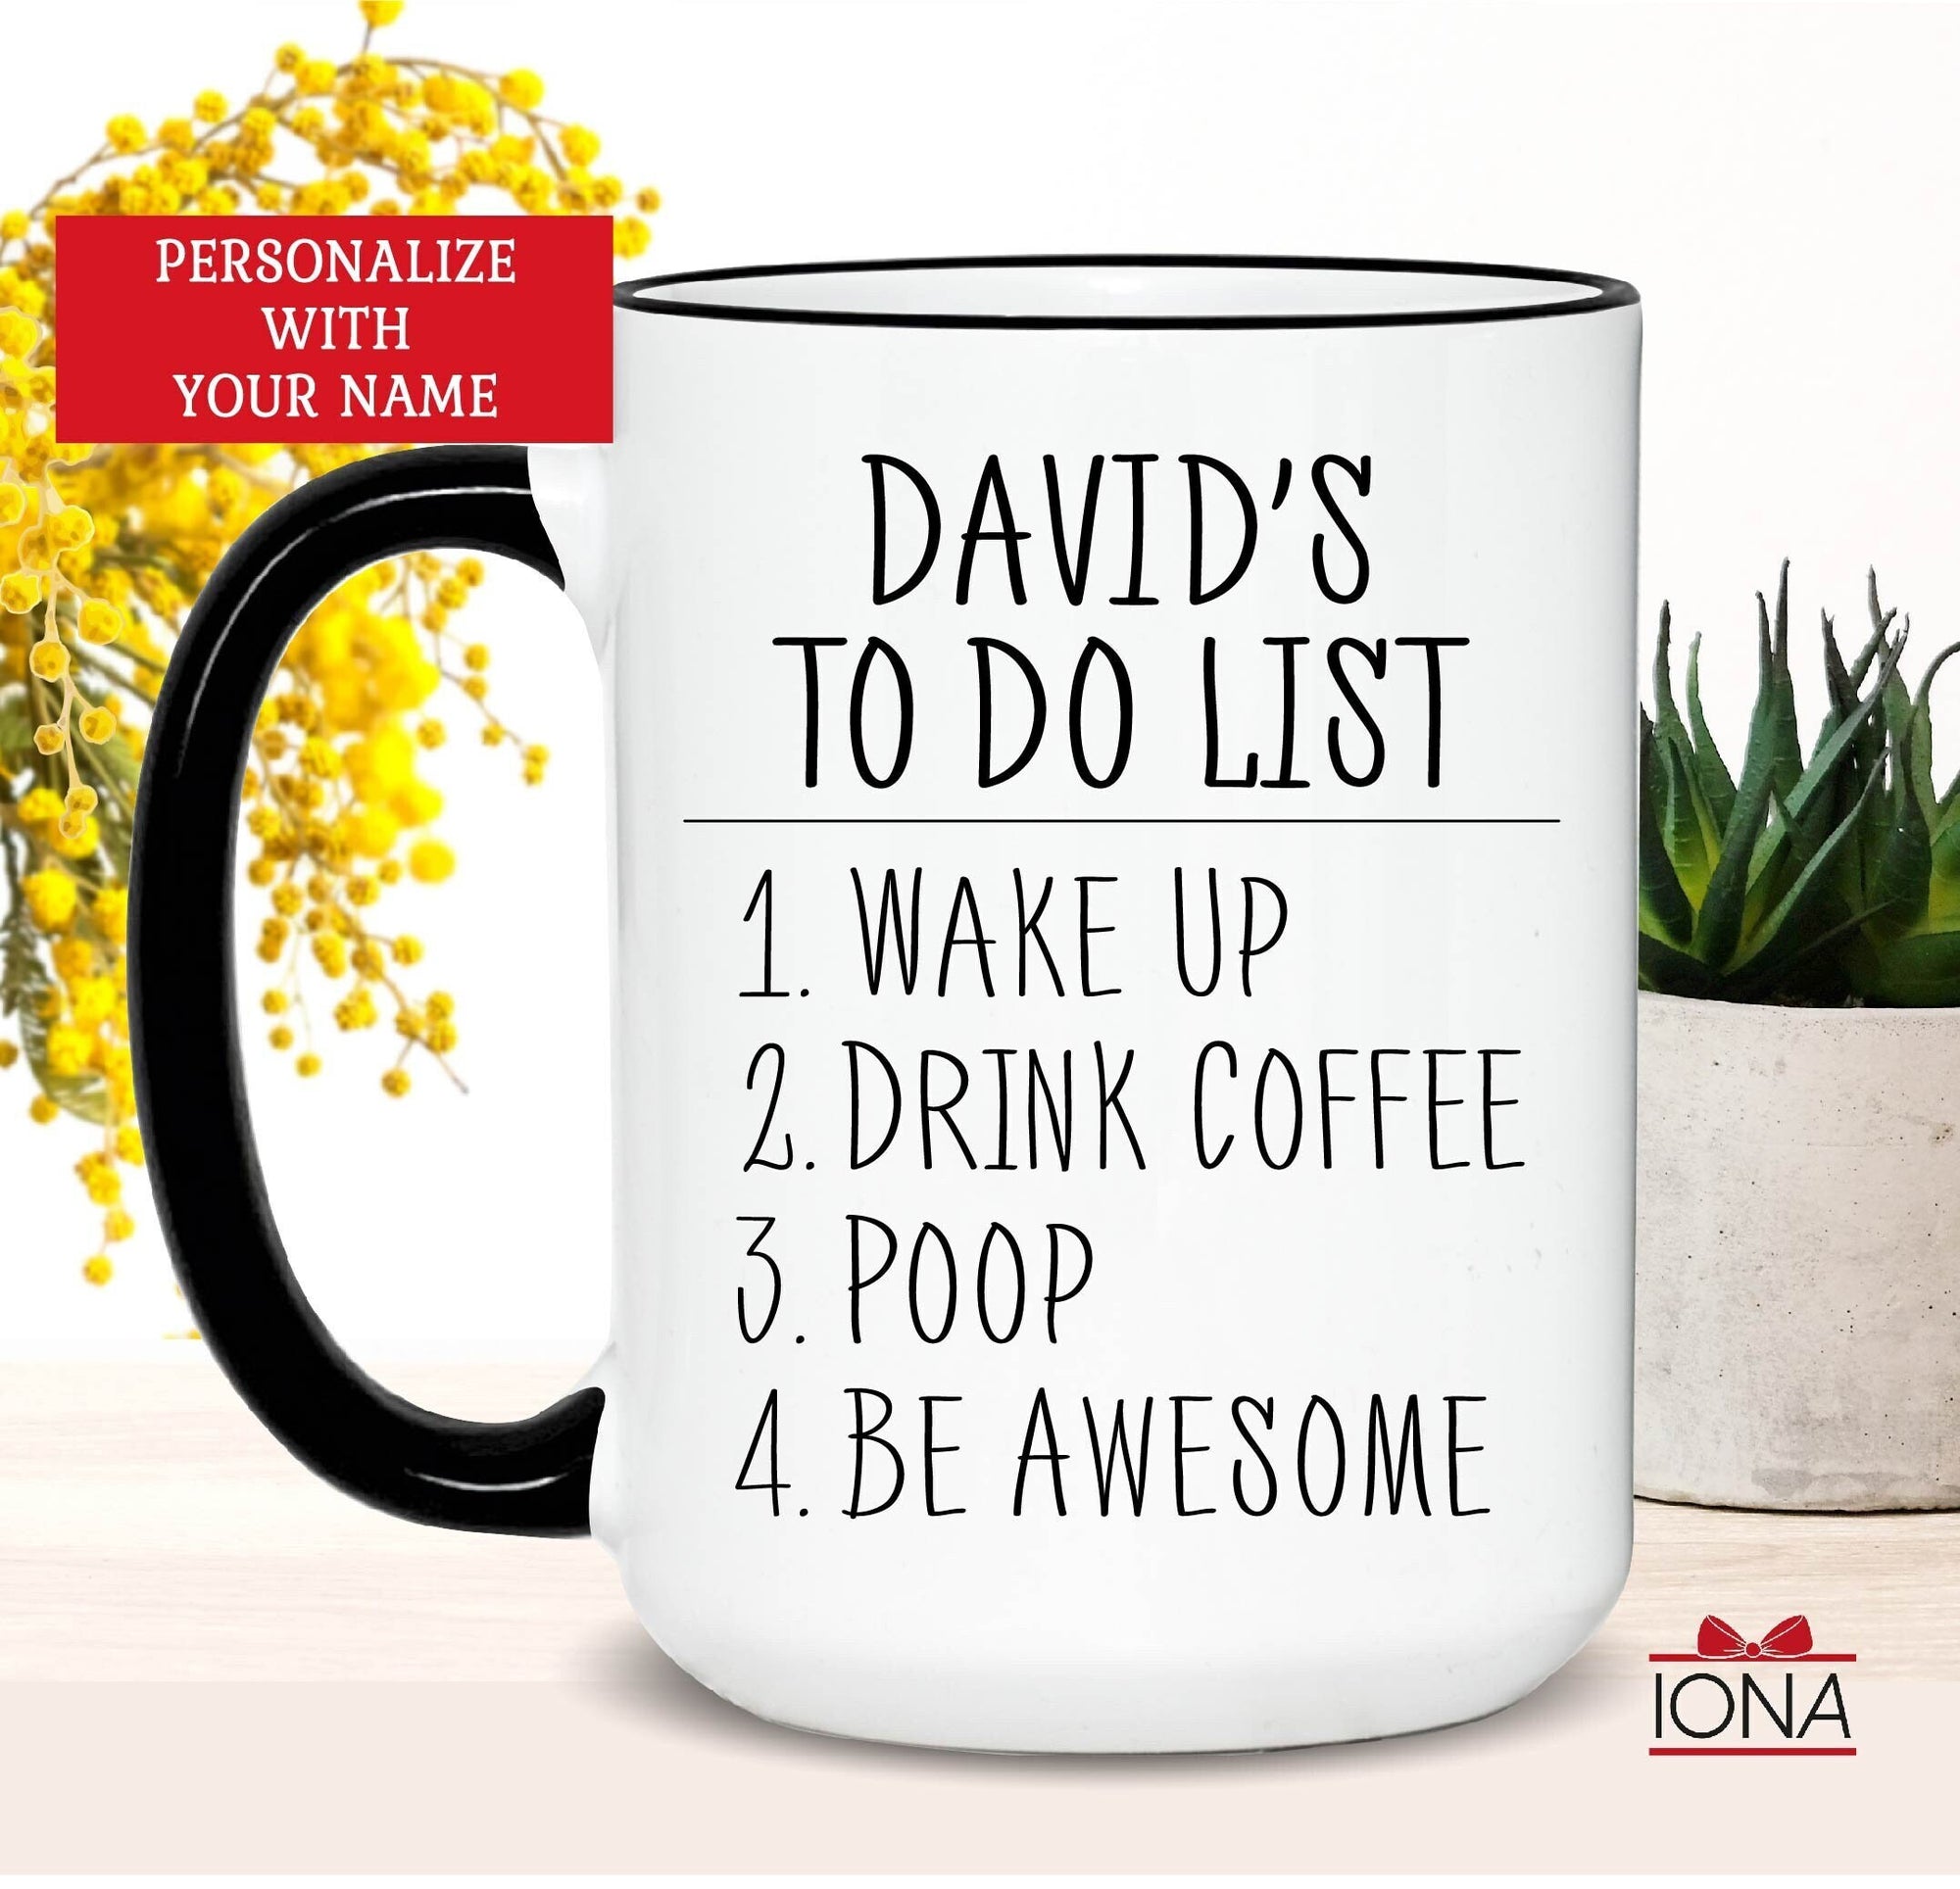 Personalized Funny To Do List Coffee Mug, Unique Coffee Mug, Quote Mug, Inspirational Mug, Motivational Mug, Fun Mugs, Funny Gift, Poop Mug